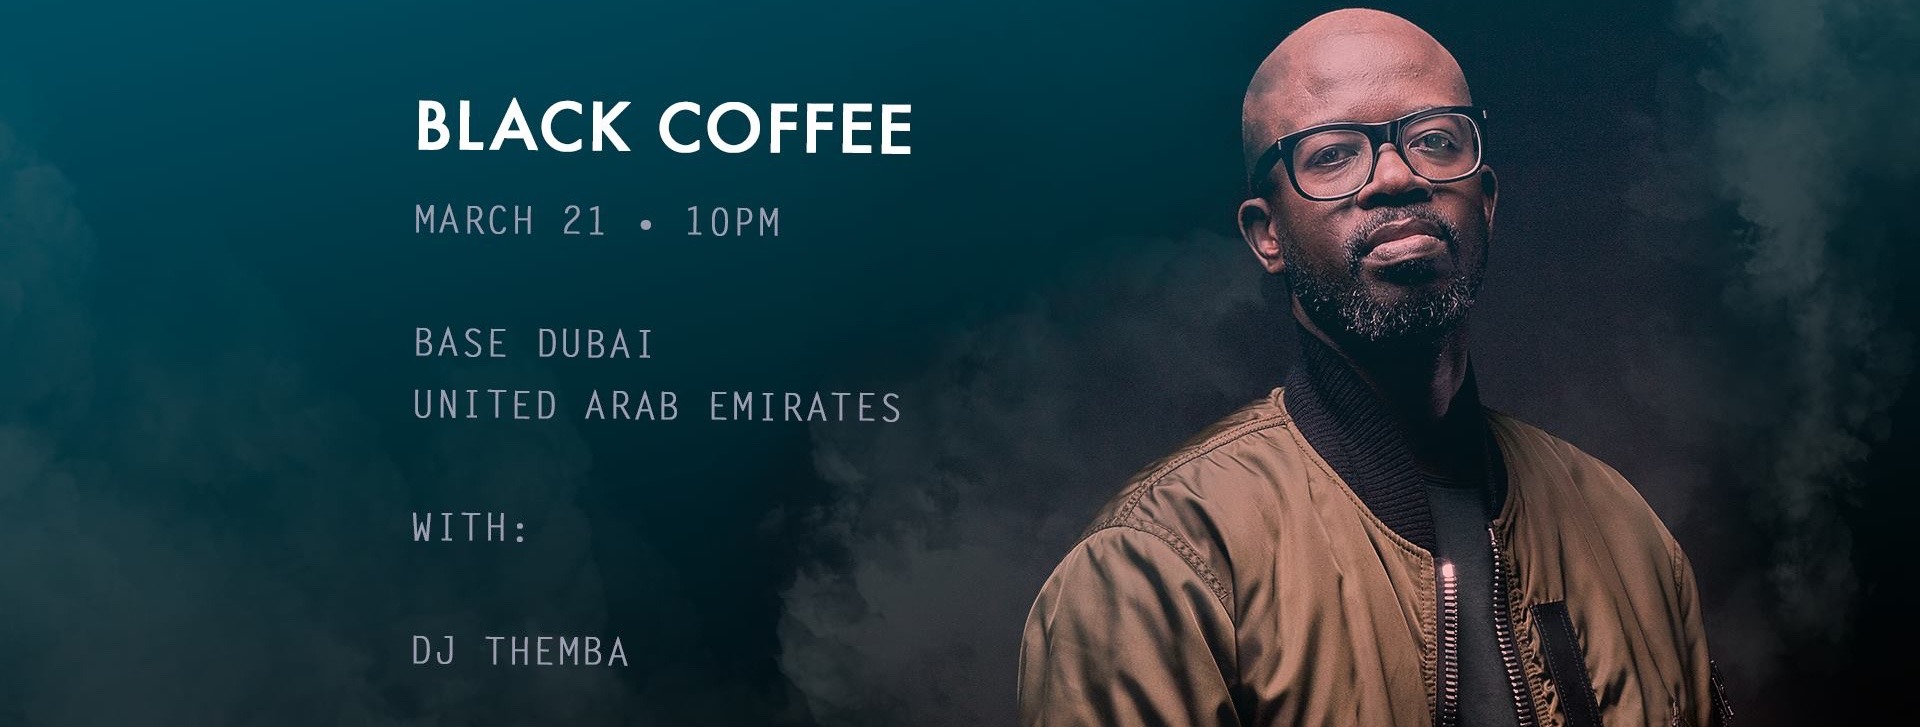 Black Coffee at Base Dubai - Coming Soon in UAE